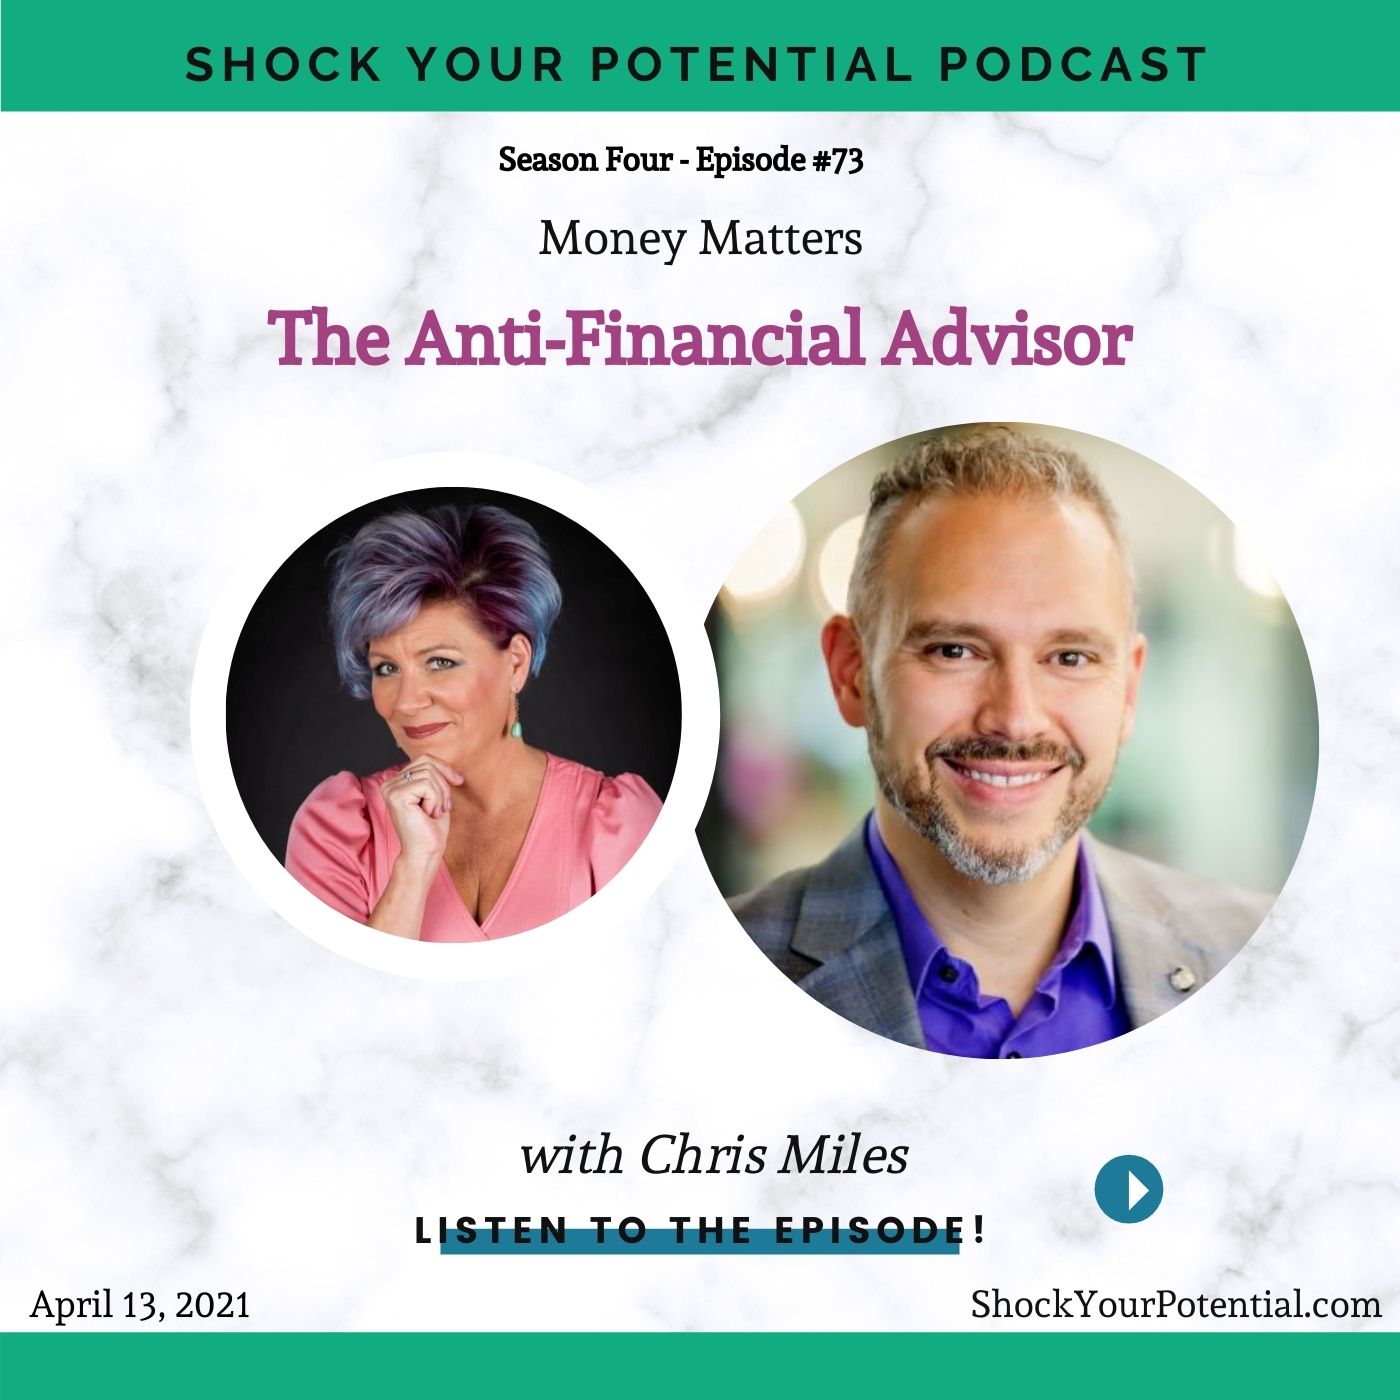 The Anti-Financial Advisor – Chris Miles